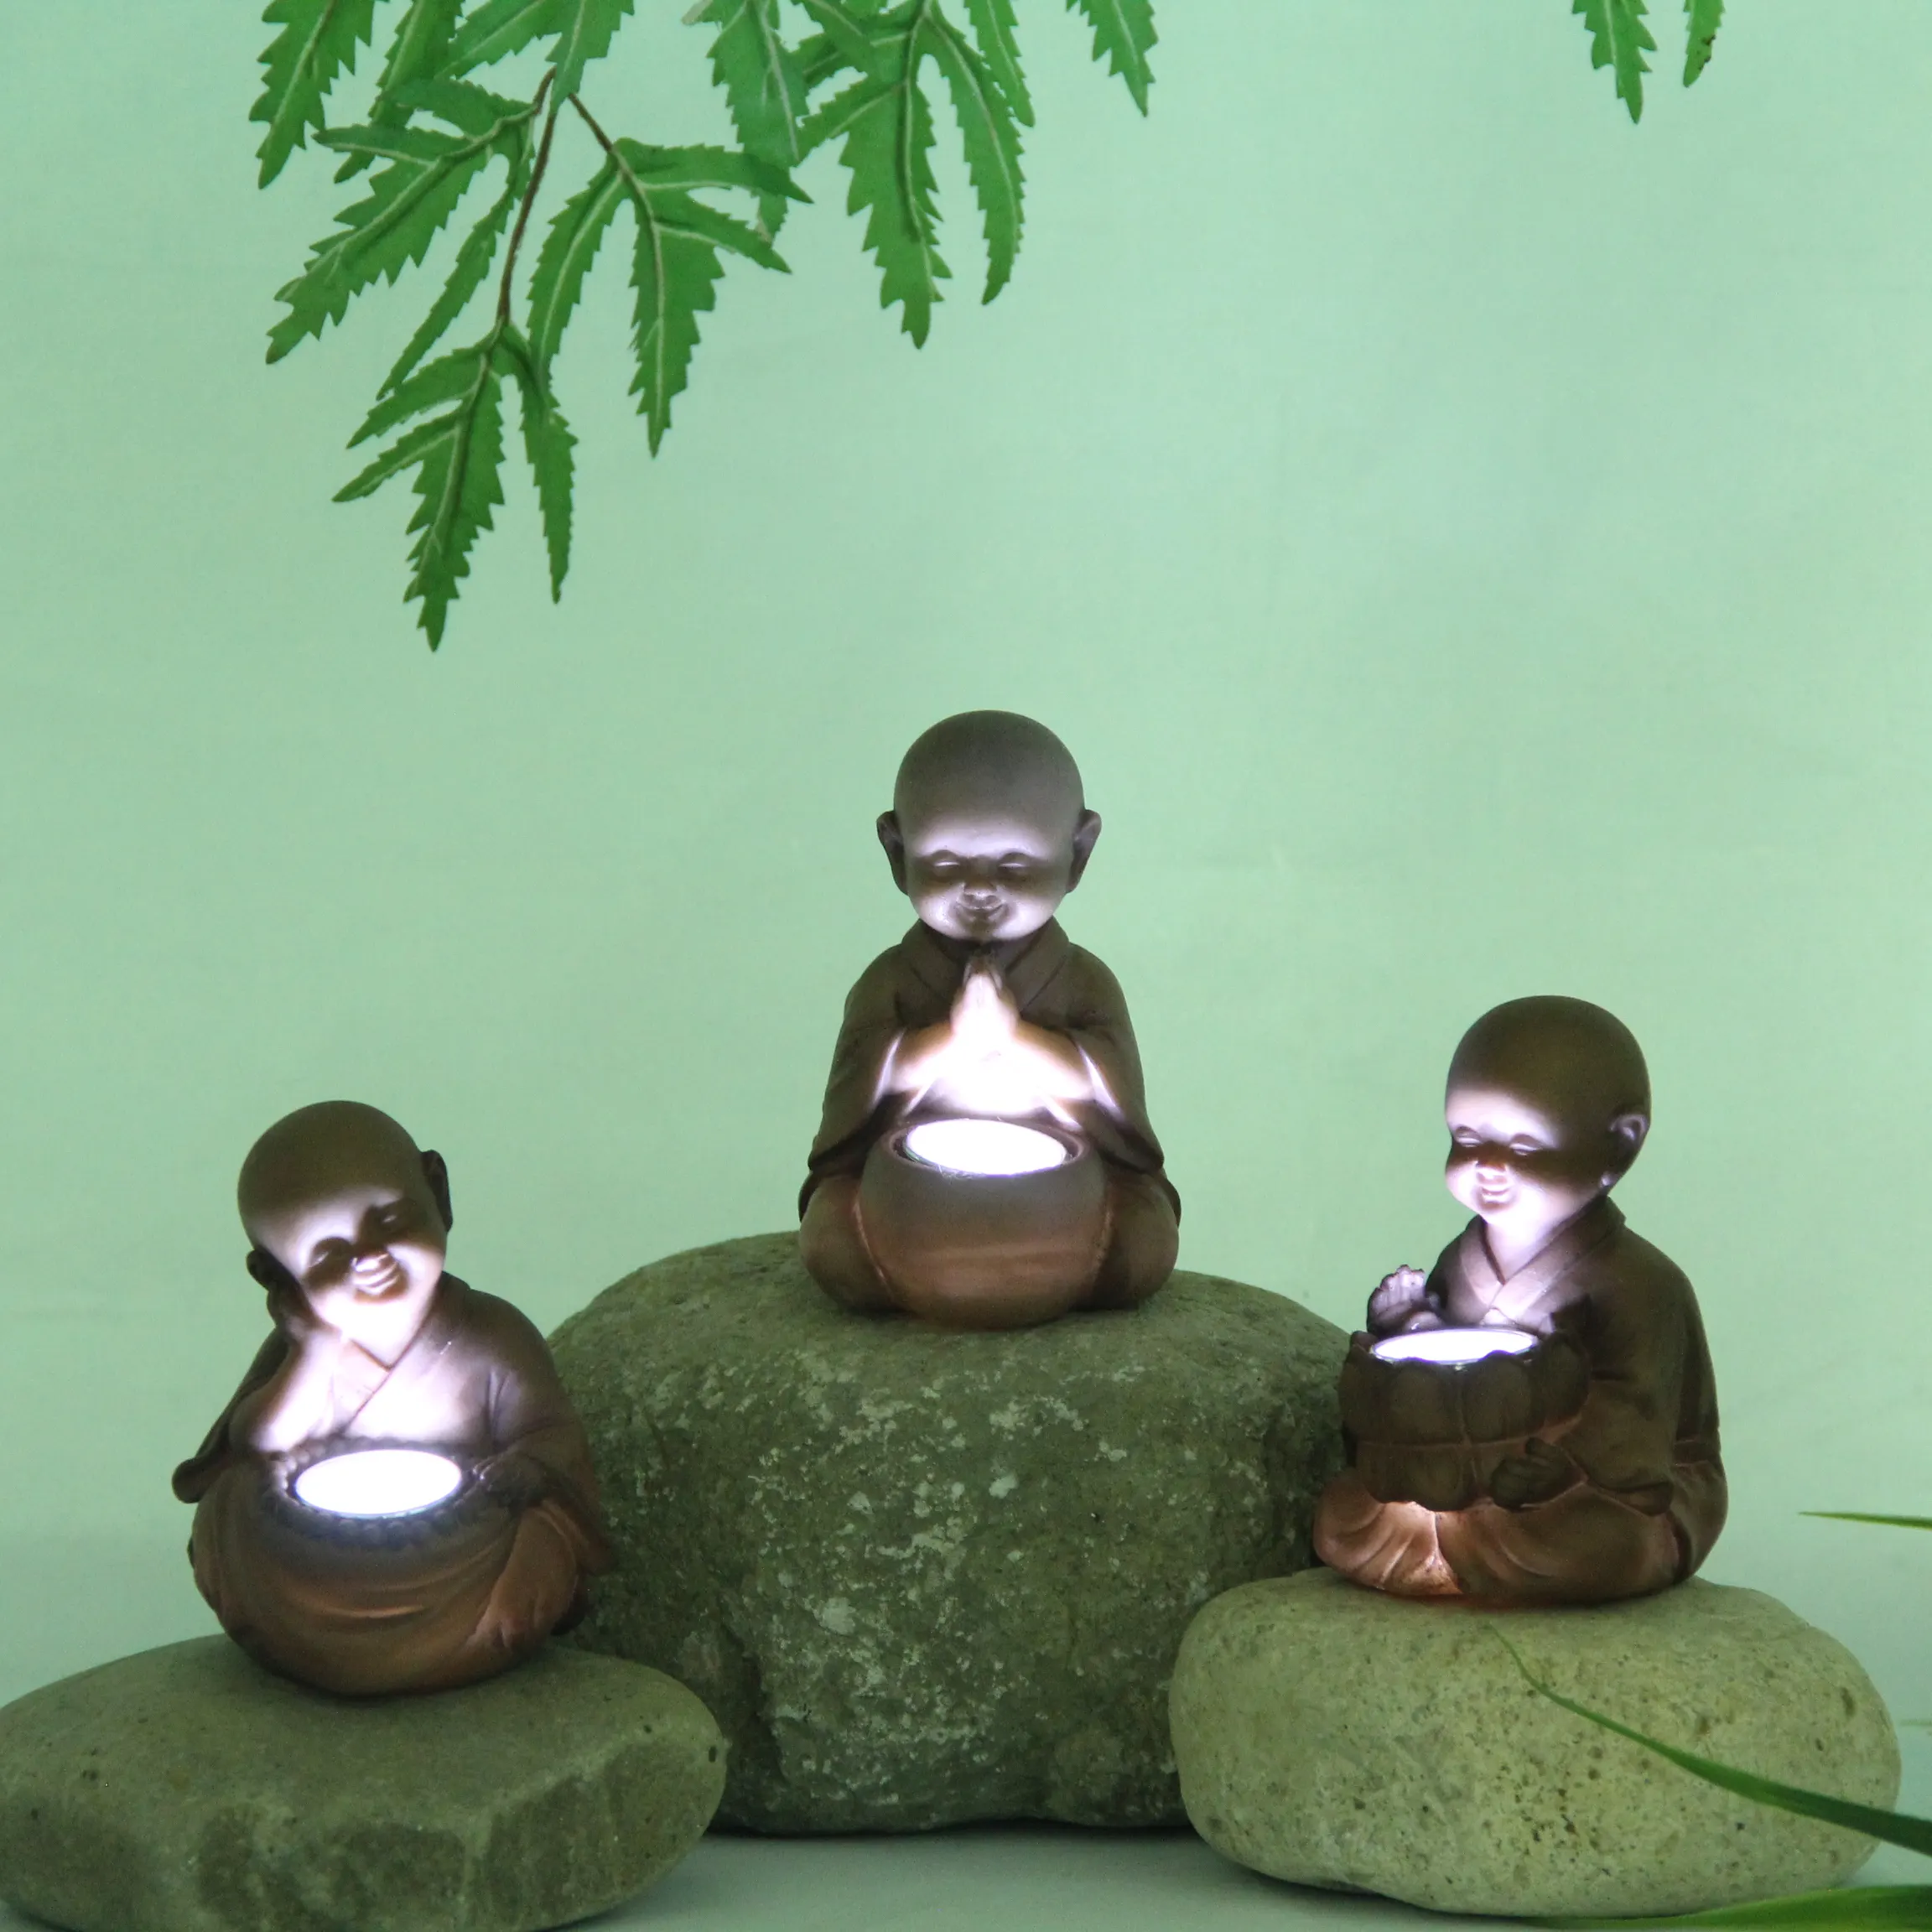 resin ornaments happy buddha monk figure,led solar light garden monk decor resin toys